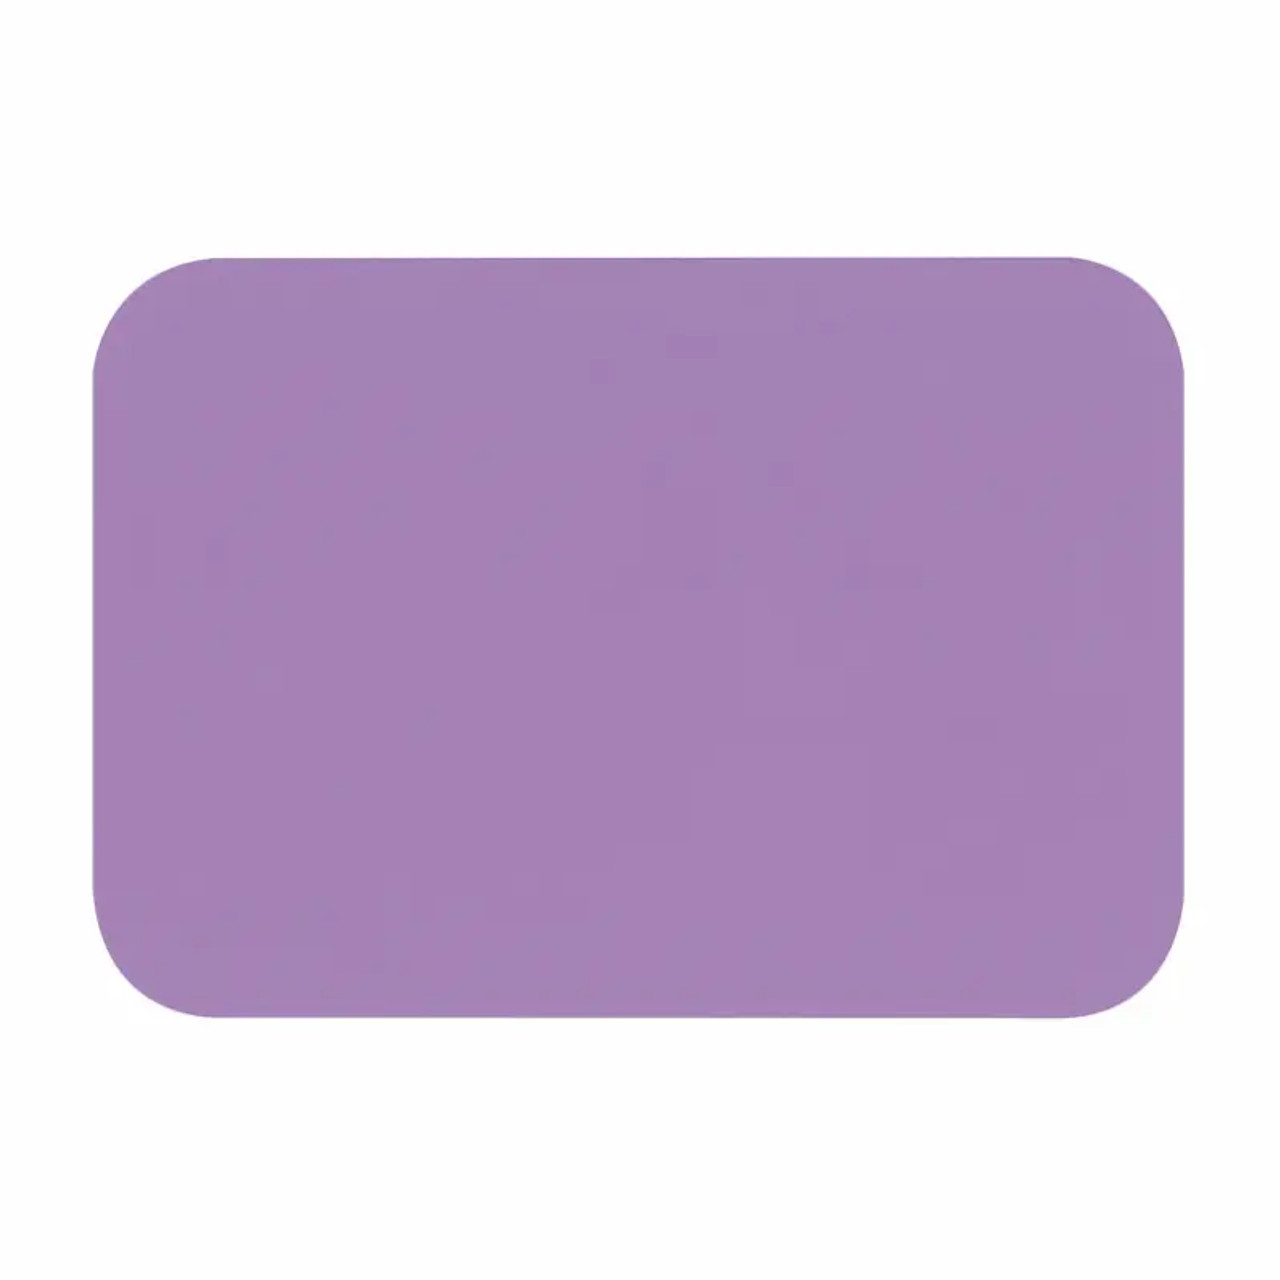 Dukal Tray Covers Lavender 8-1/2"x 12-1/4" 1000/cs